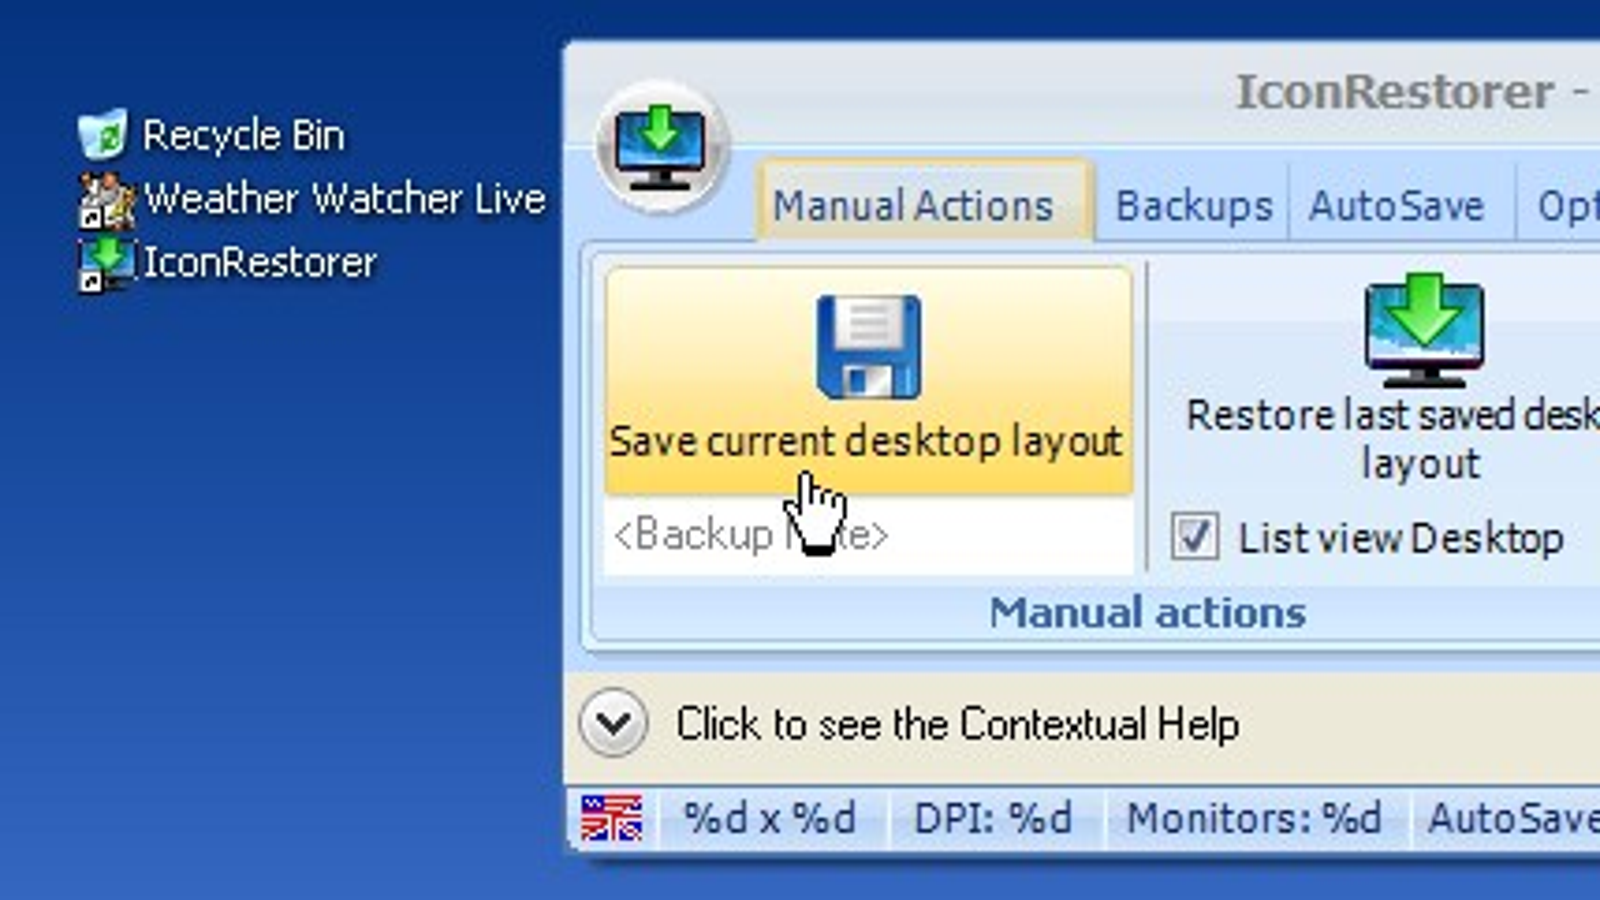 how use desktopok two monitors